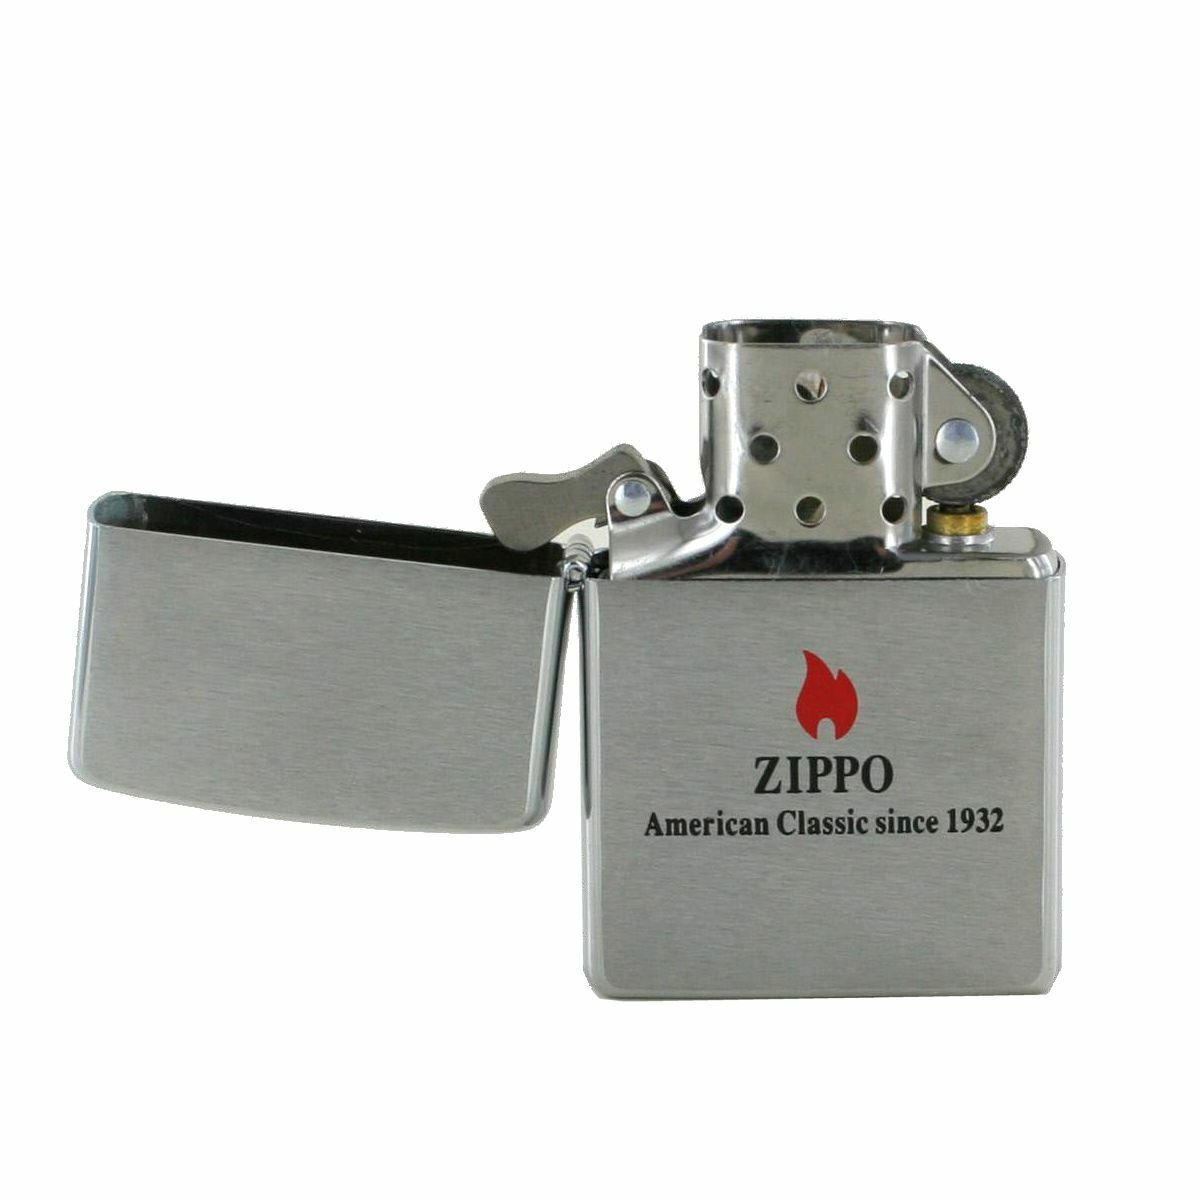 Zippo Lighter Model 200 Zippo American Classic Since 1932 | eBay